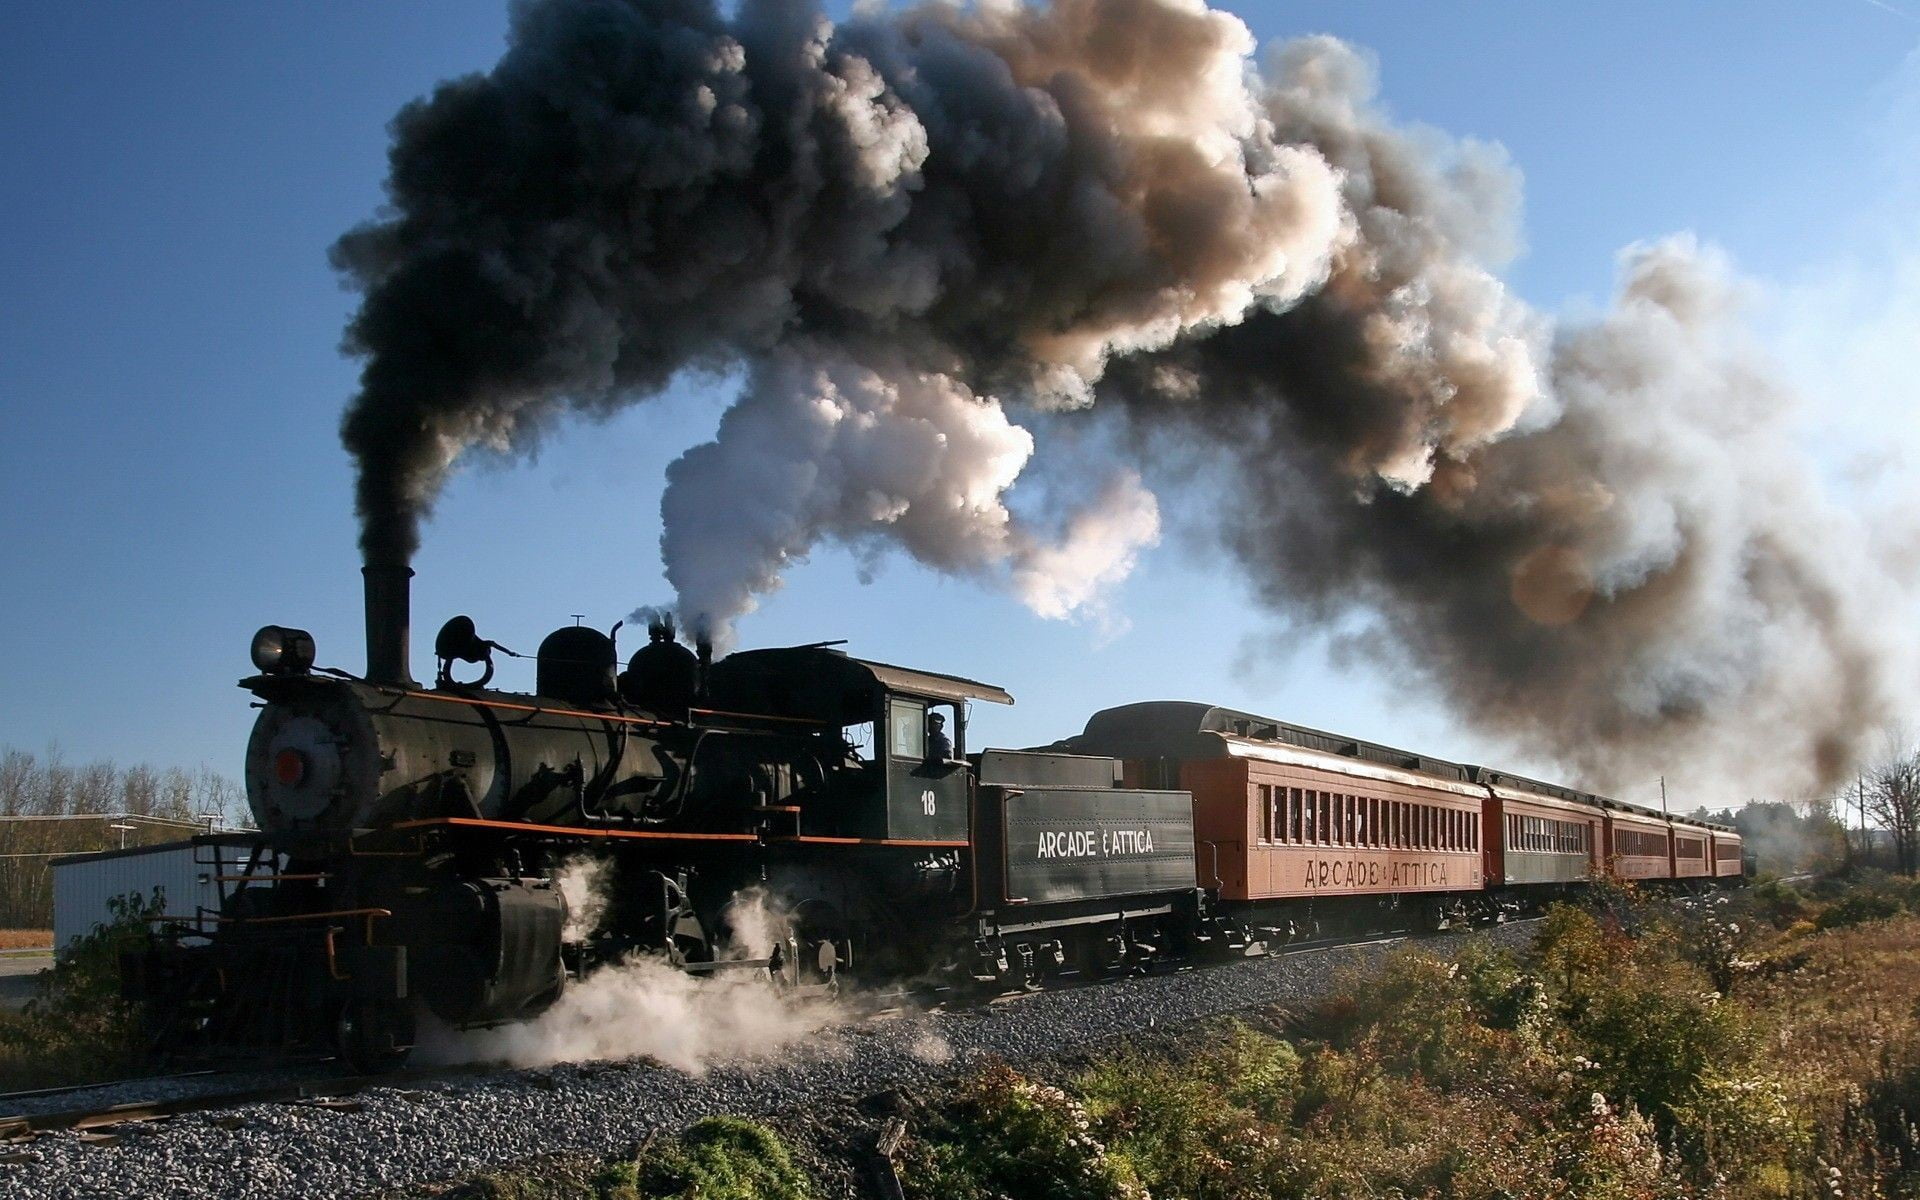 Classic steam trains фото 3